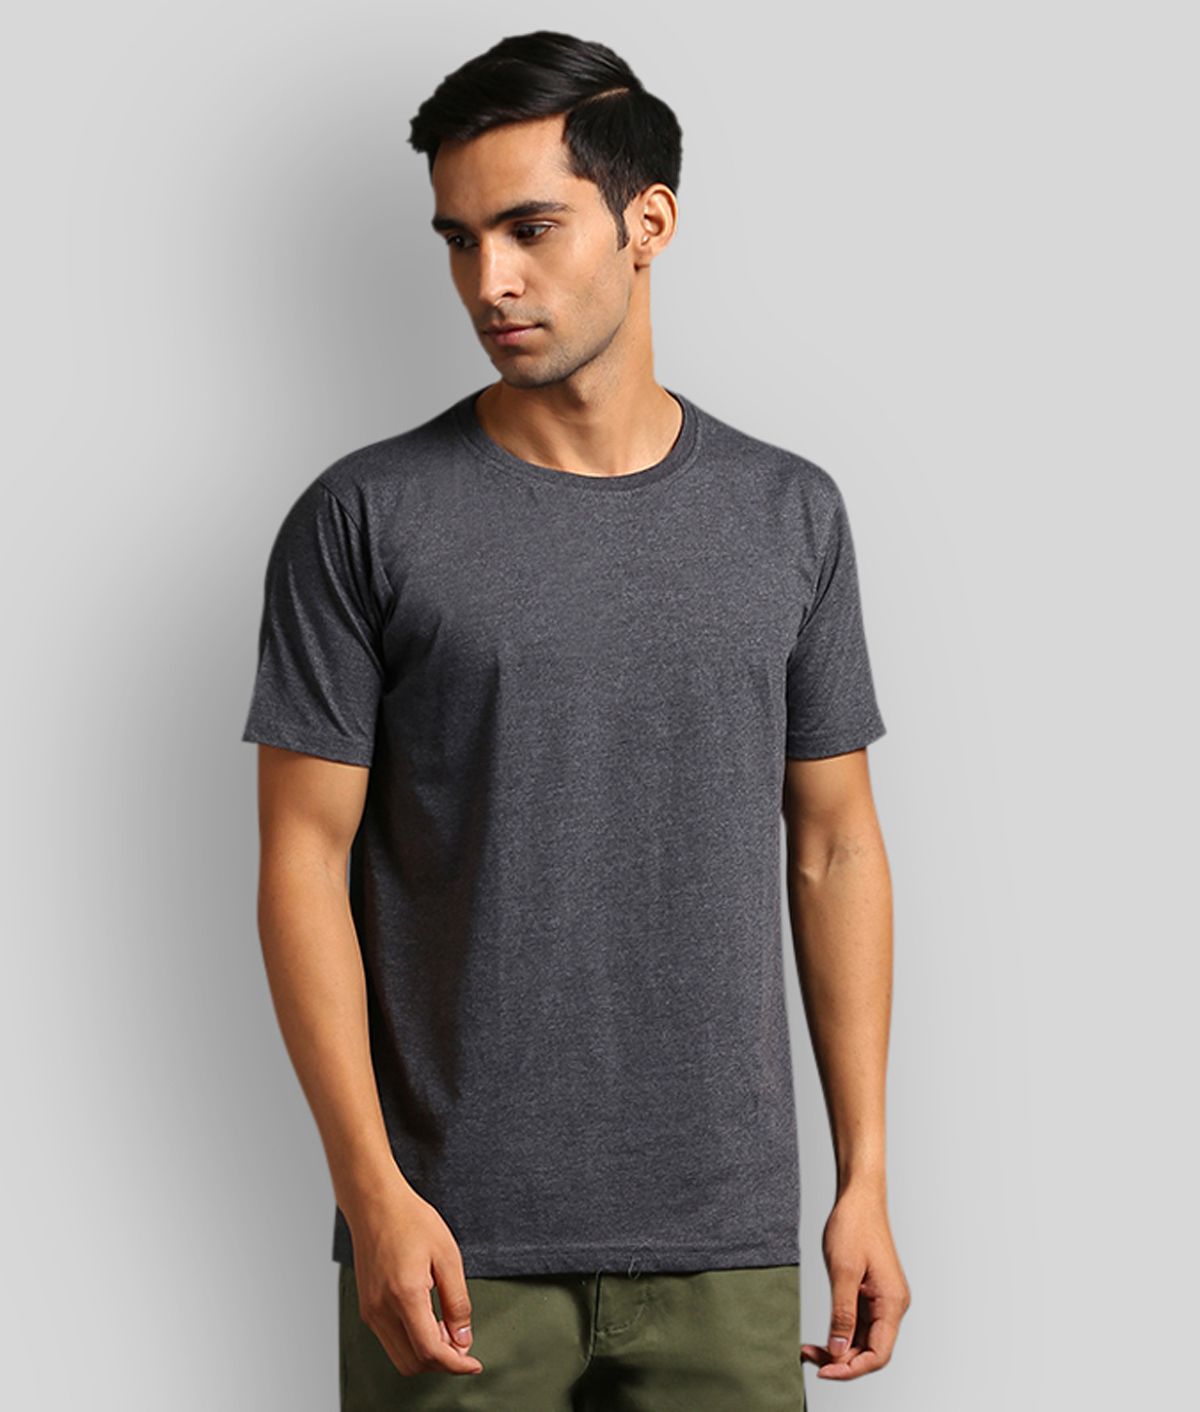 David Crew - Multi Cotton Blend Regular Fit Men's T-Shirt ( Pack of 2 )